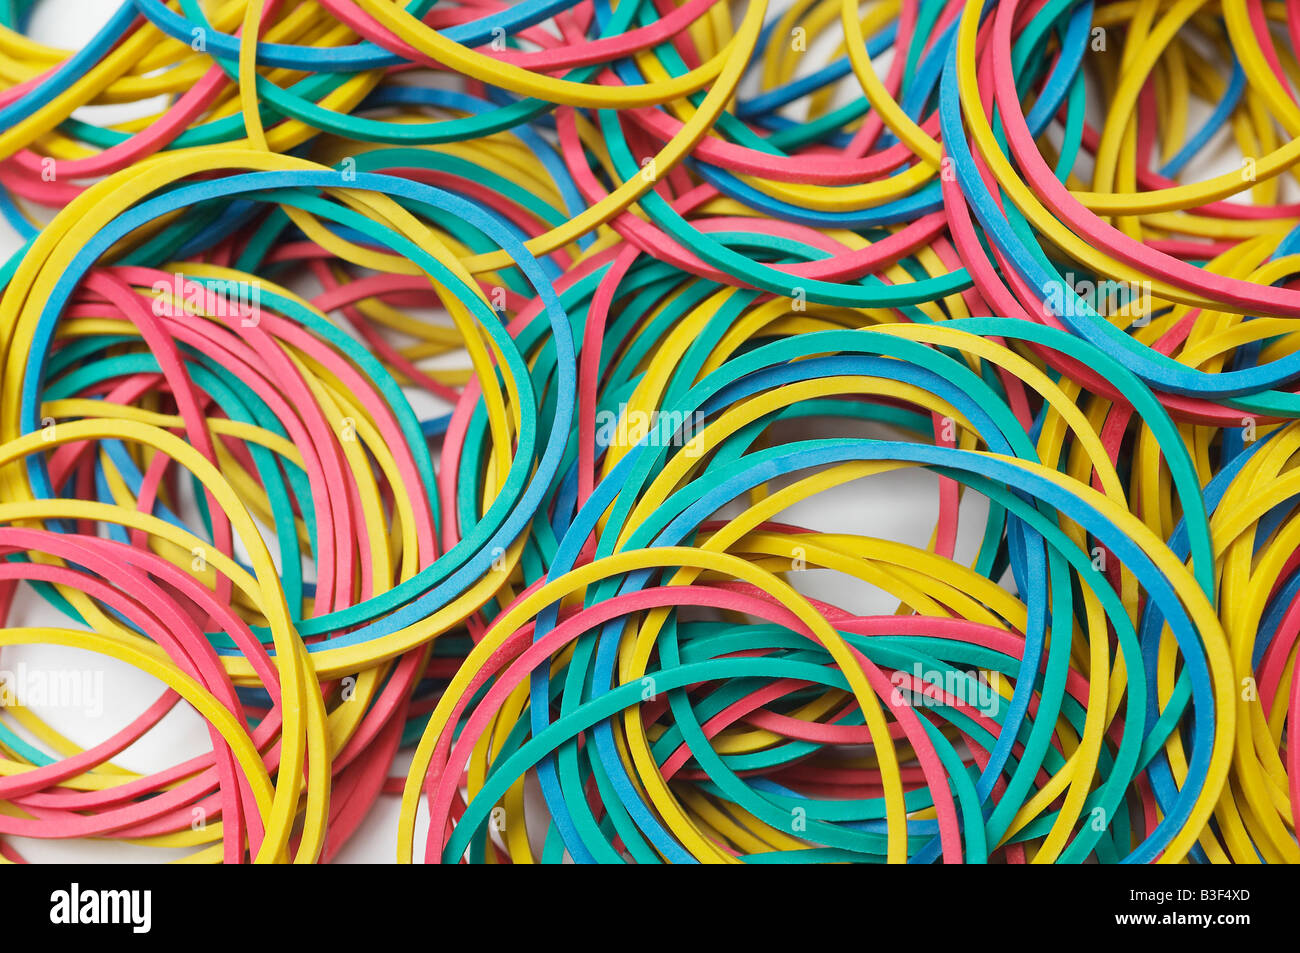 Multi colored rubber bands Stock Photo